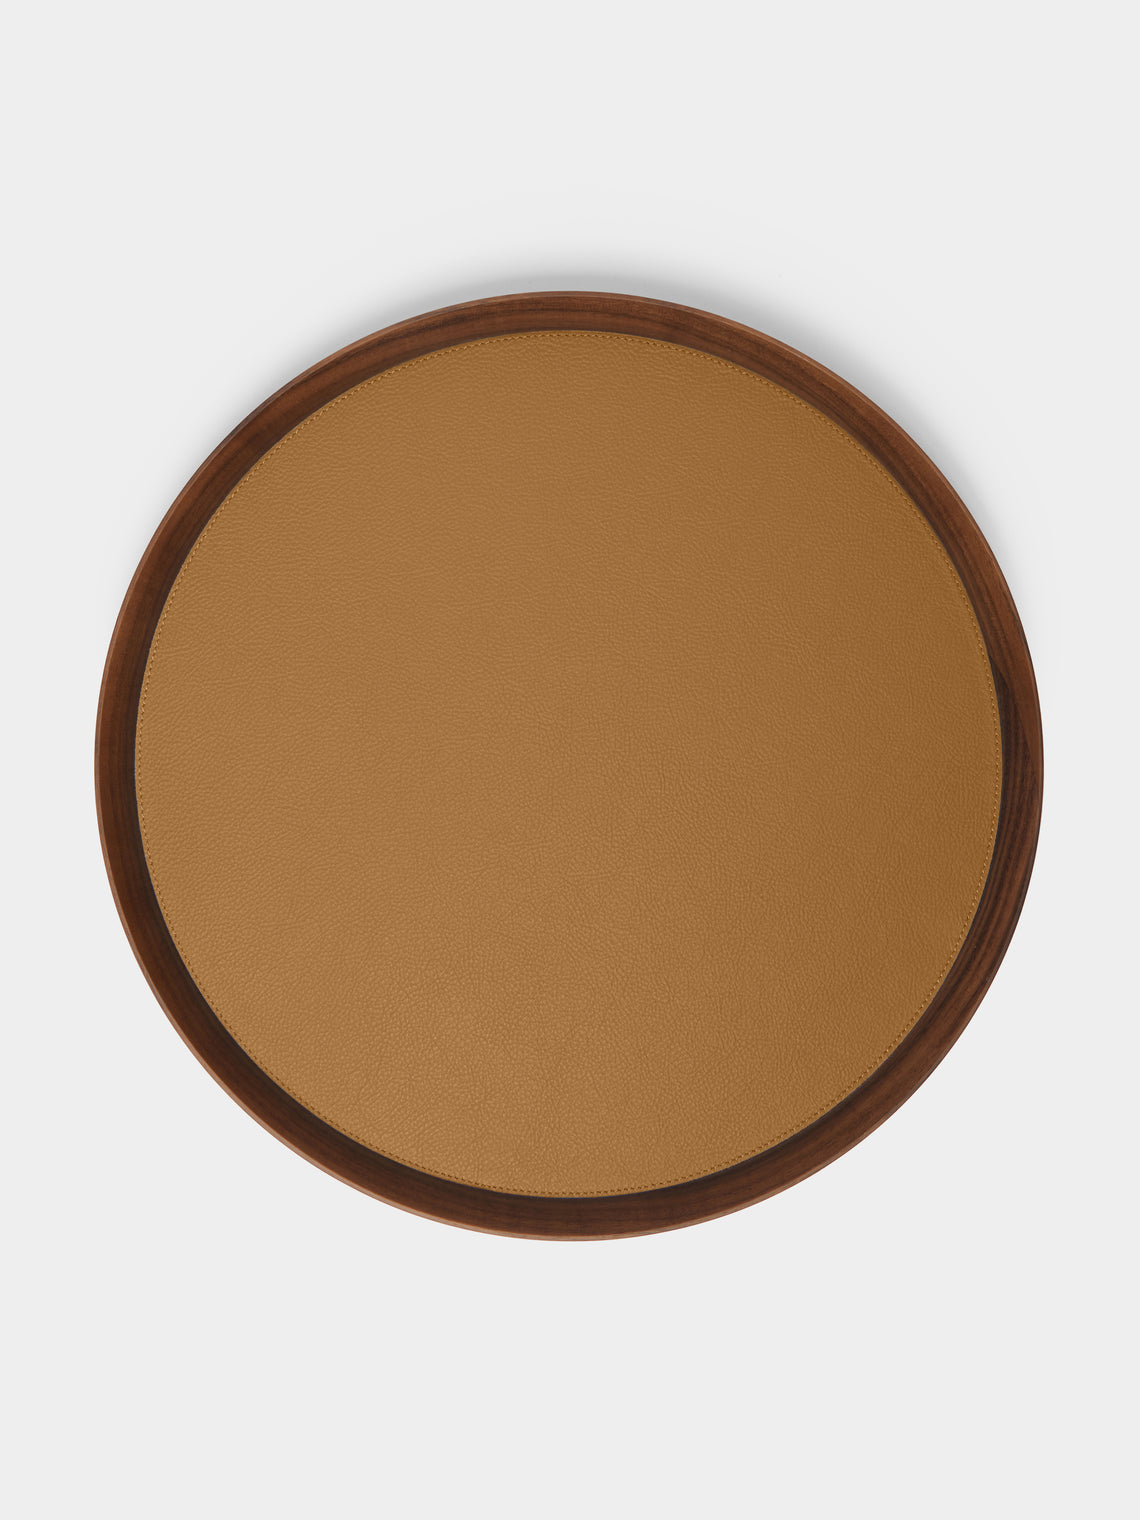 Giobagnara x Poltrona Frau - Walnut Medium Round Tray with Leather Inlay -  - ABASK - 